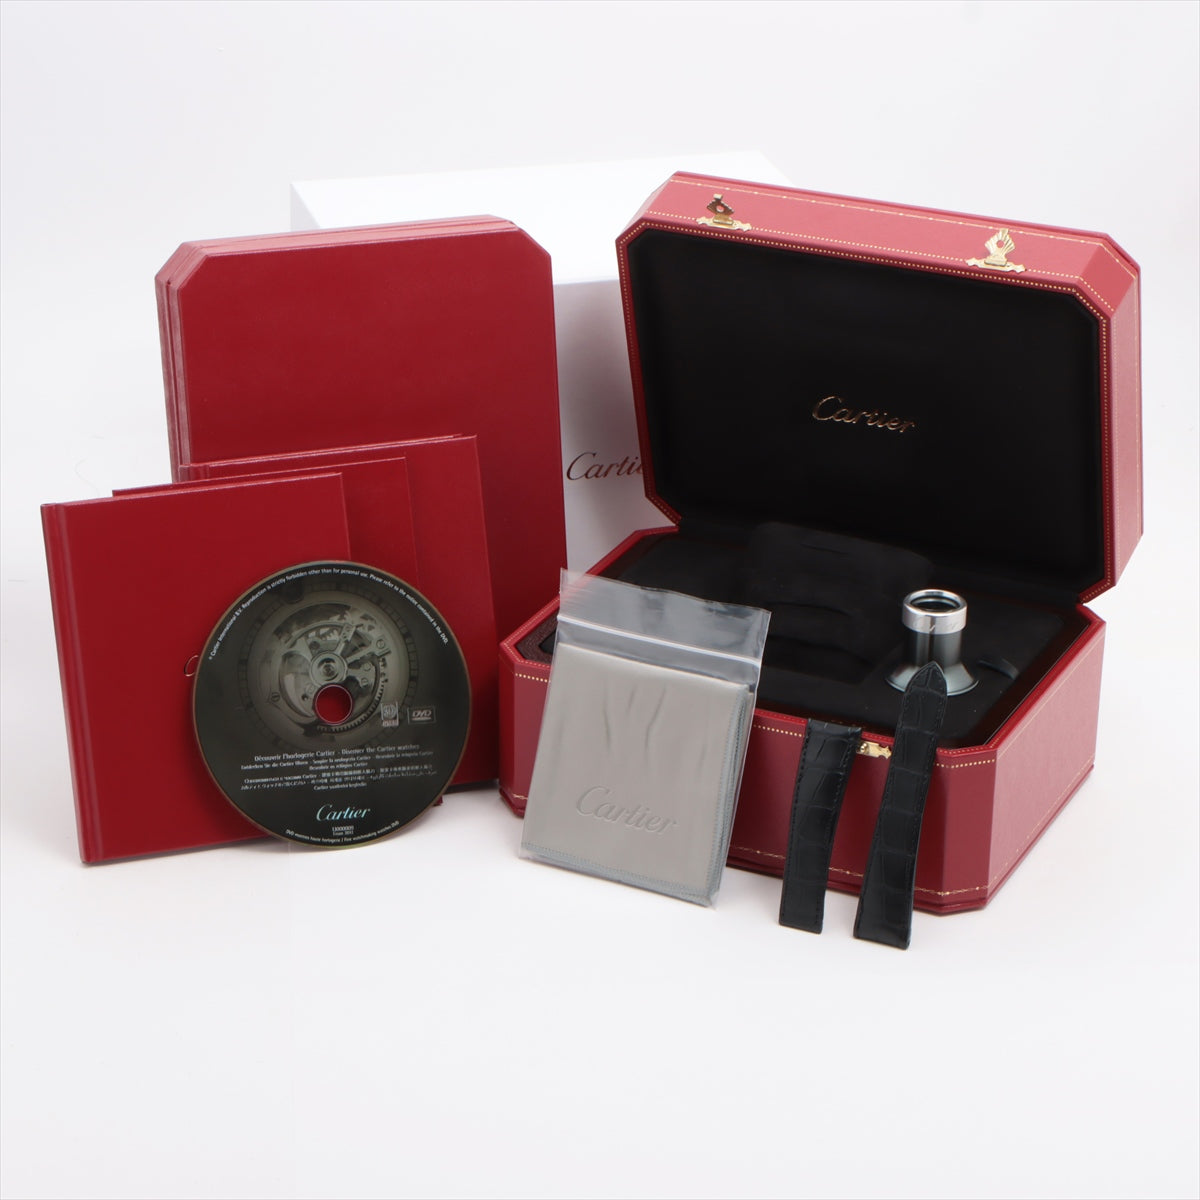 Cartier Rotond du Cartier Central Chronograph W1556051 WG  Leather  Silver Chronograph